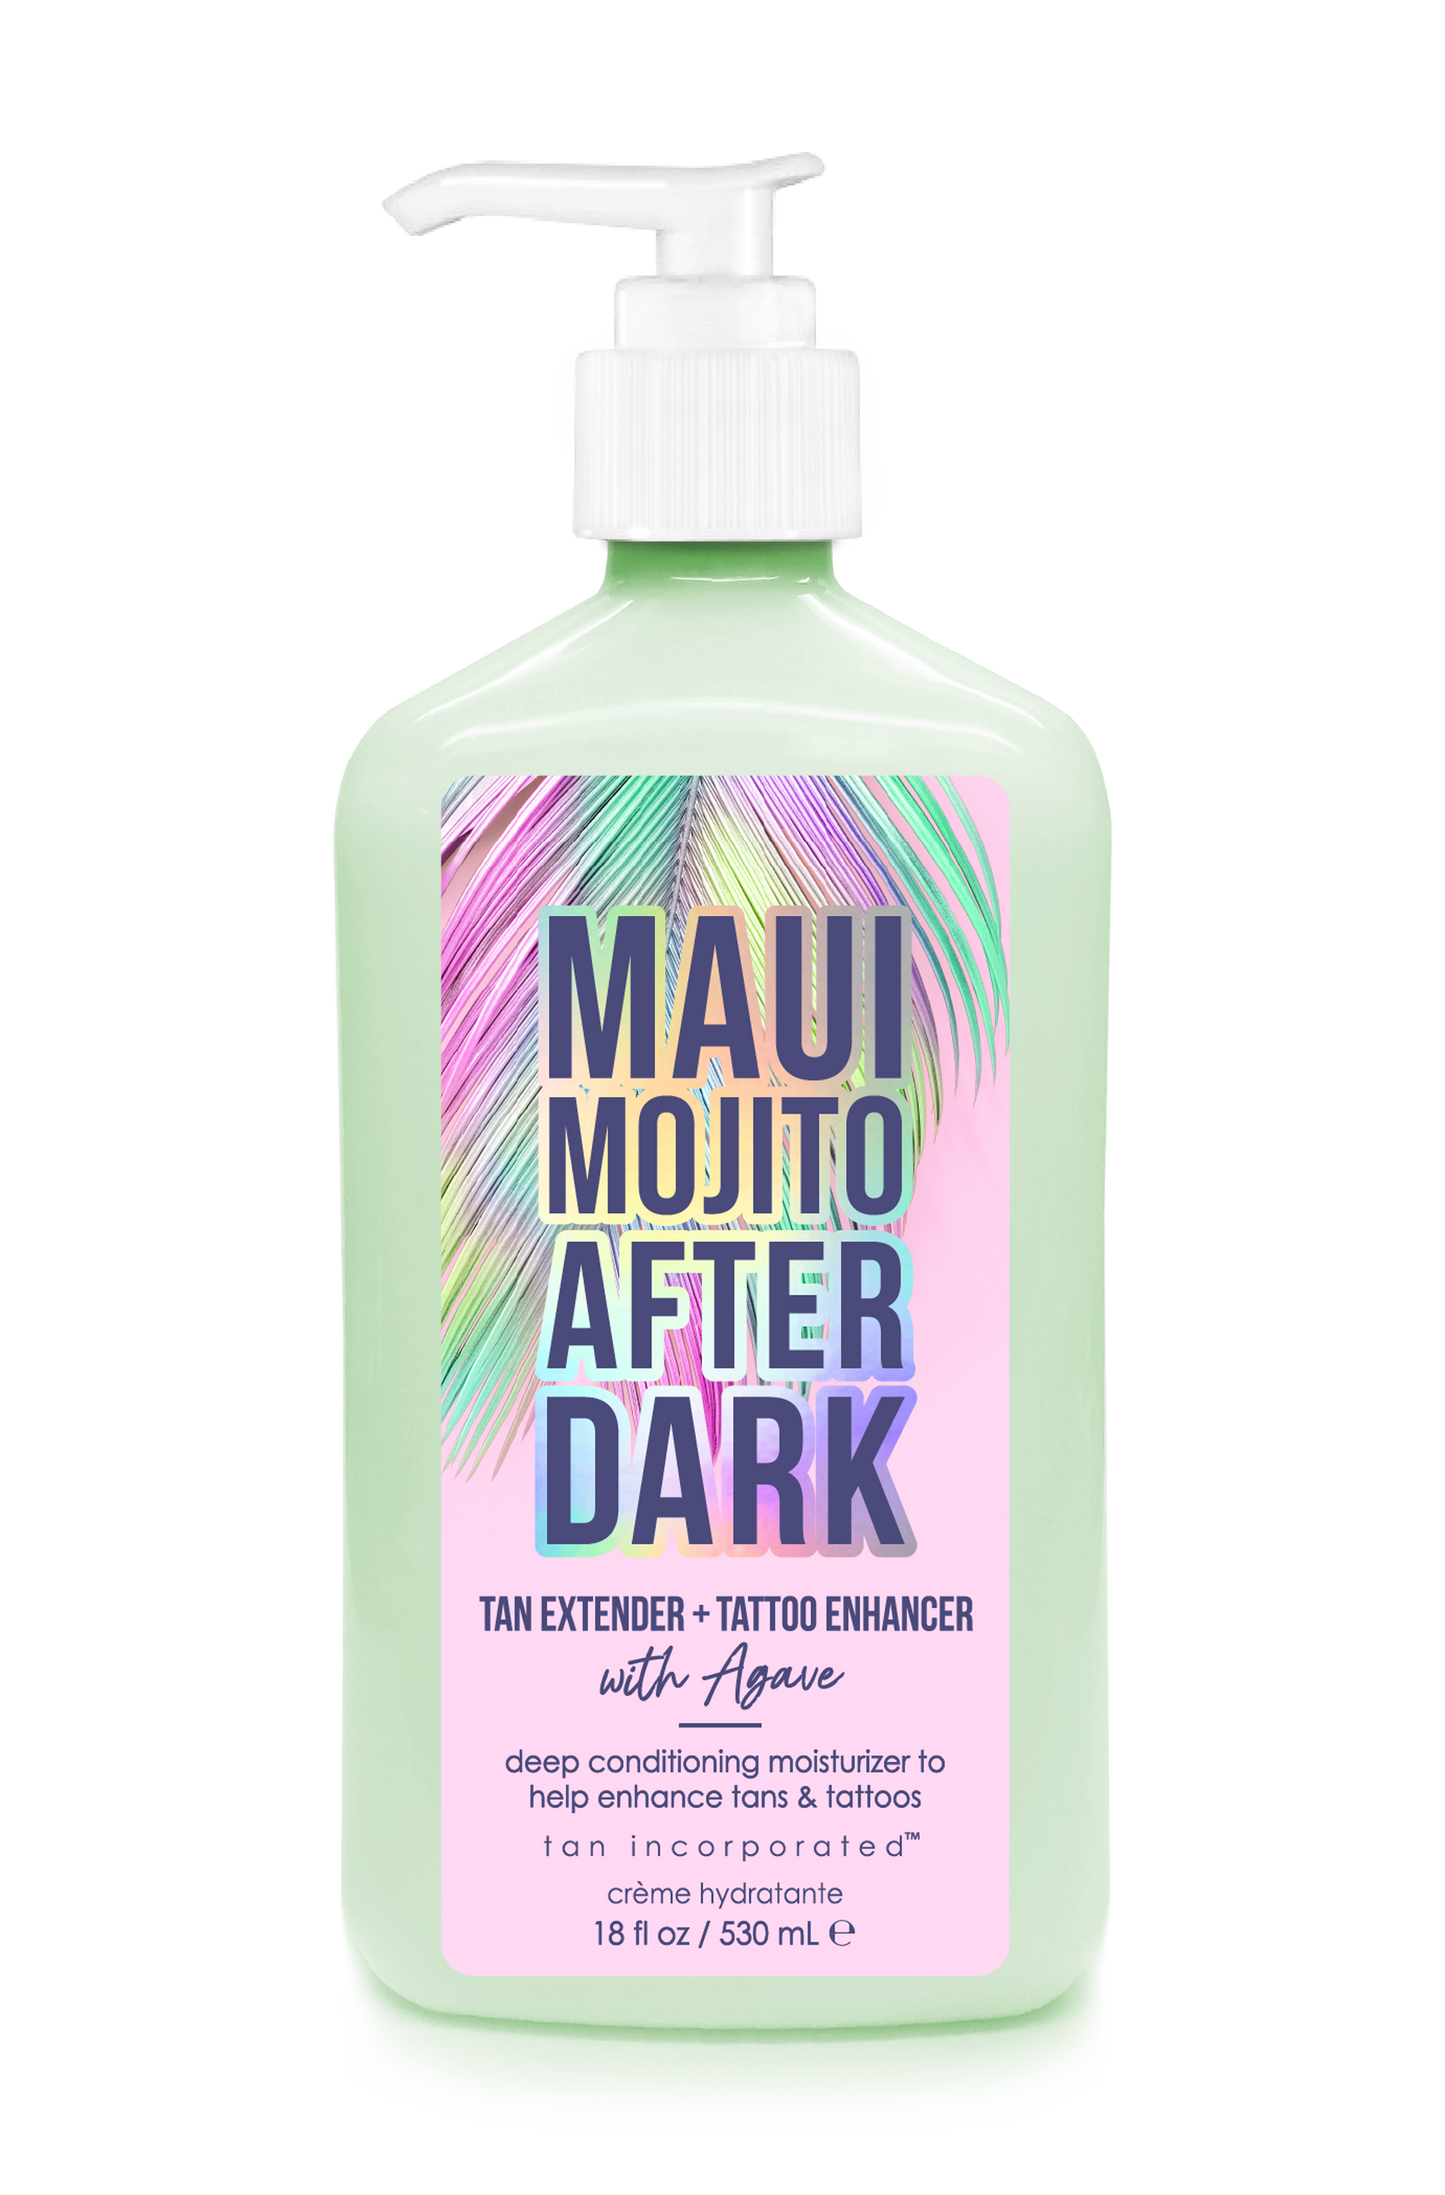 Maui Mojito After Dark Tan Extending Deep Conditioning Moisturizer Lotion w/Tattoo Enhancers - Enhance your Tan & Tattoo